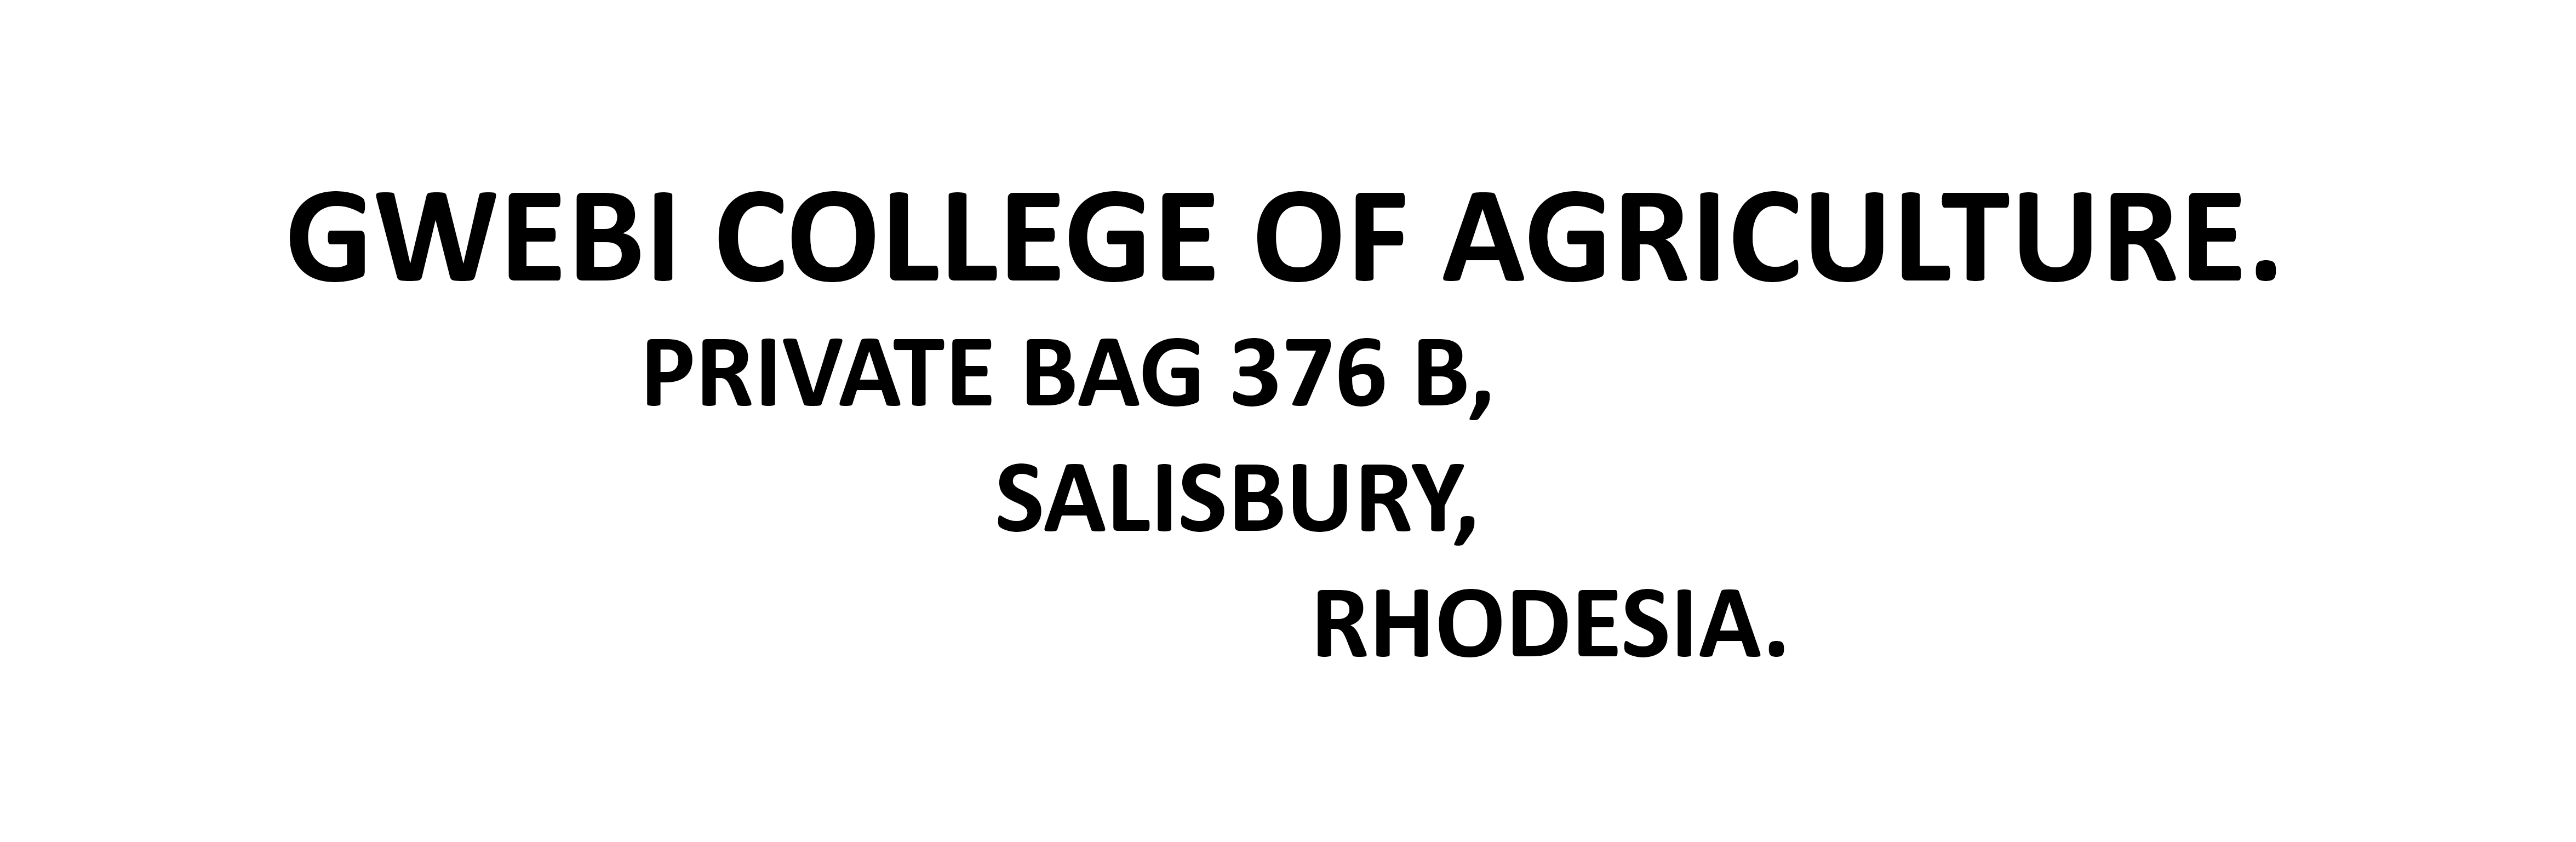 Gwebi College of Agriculture address